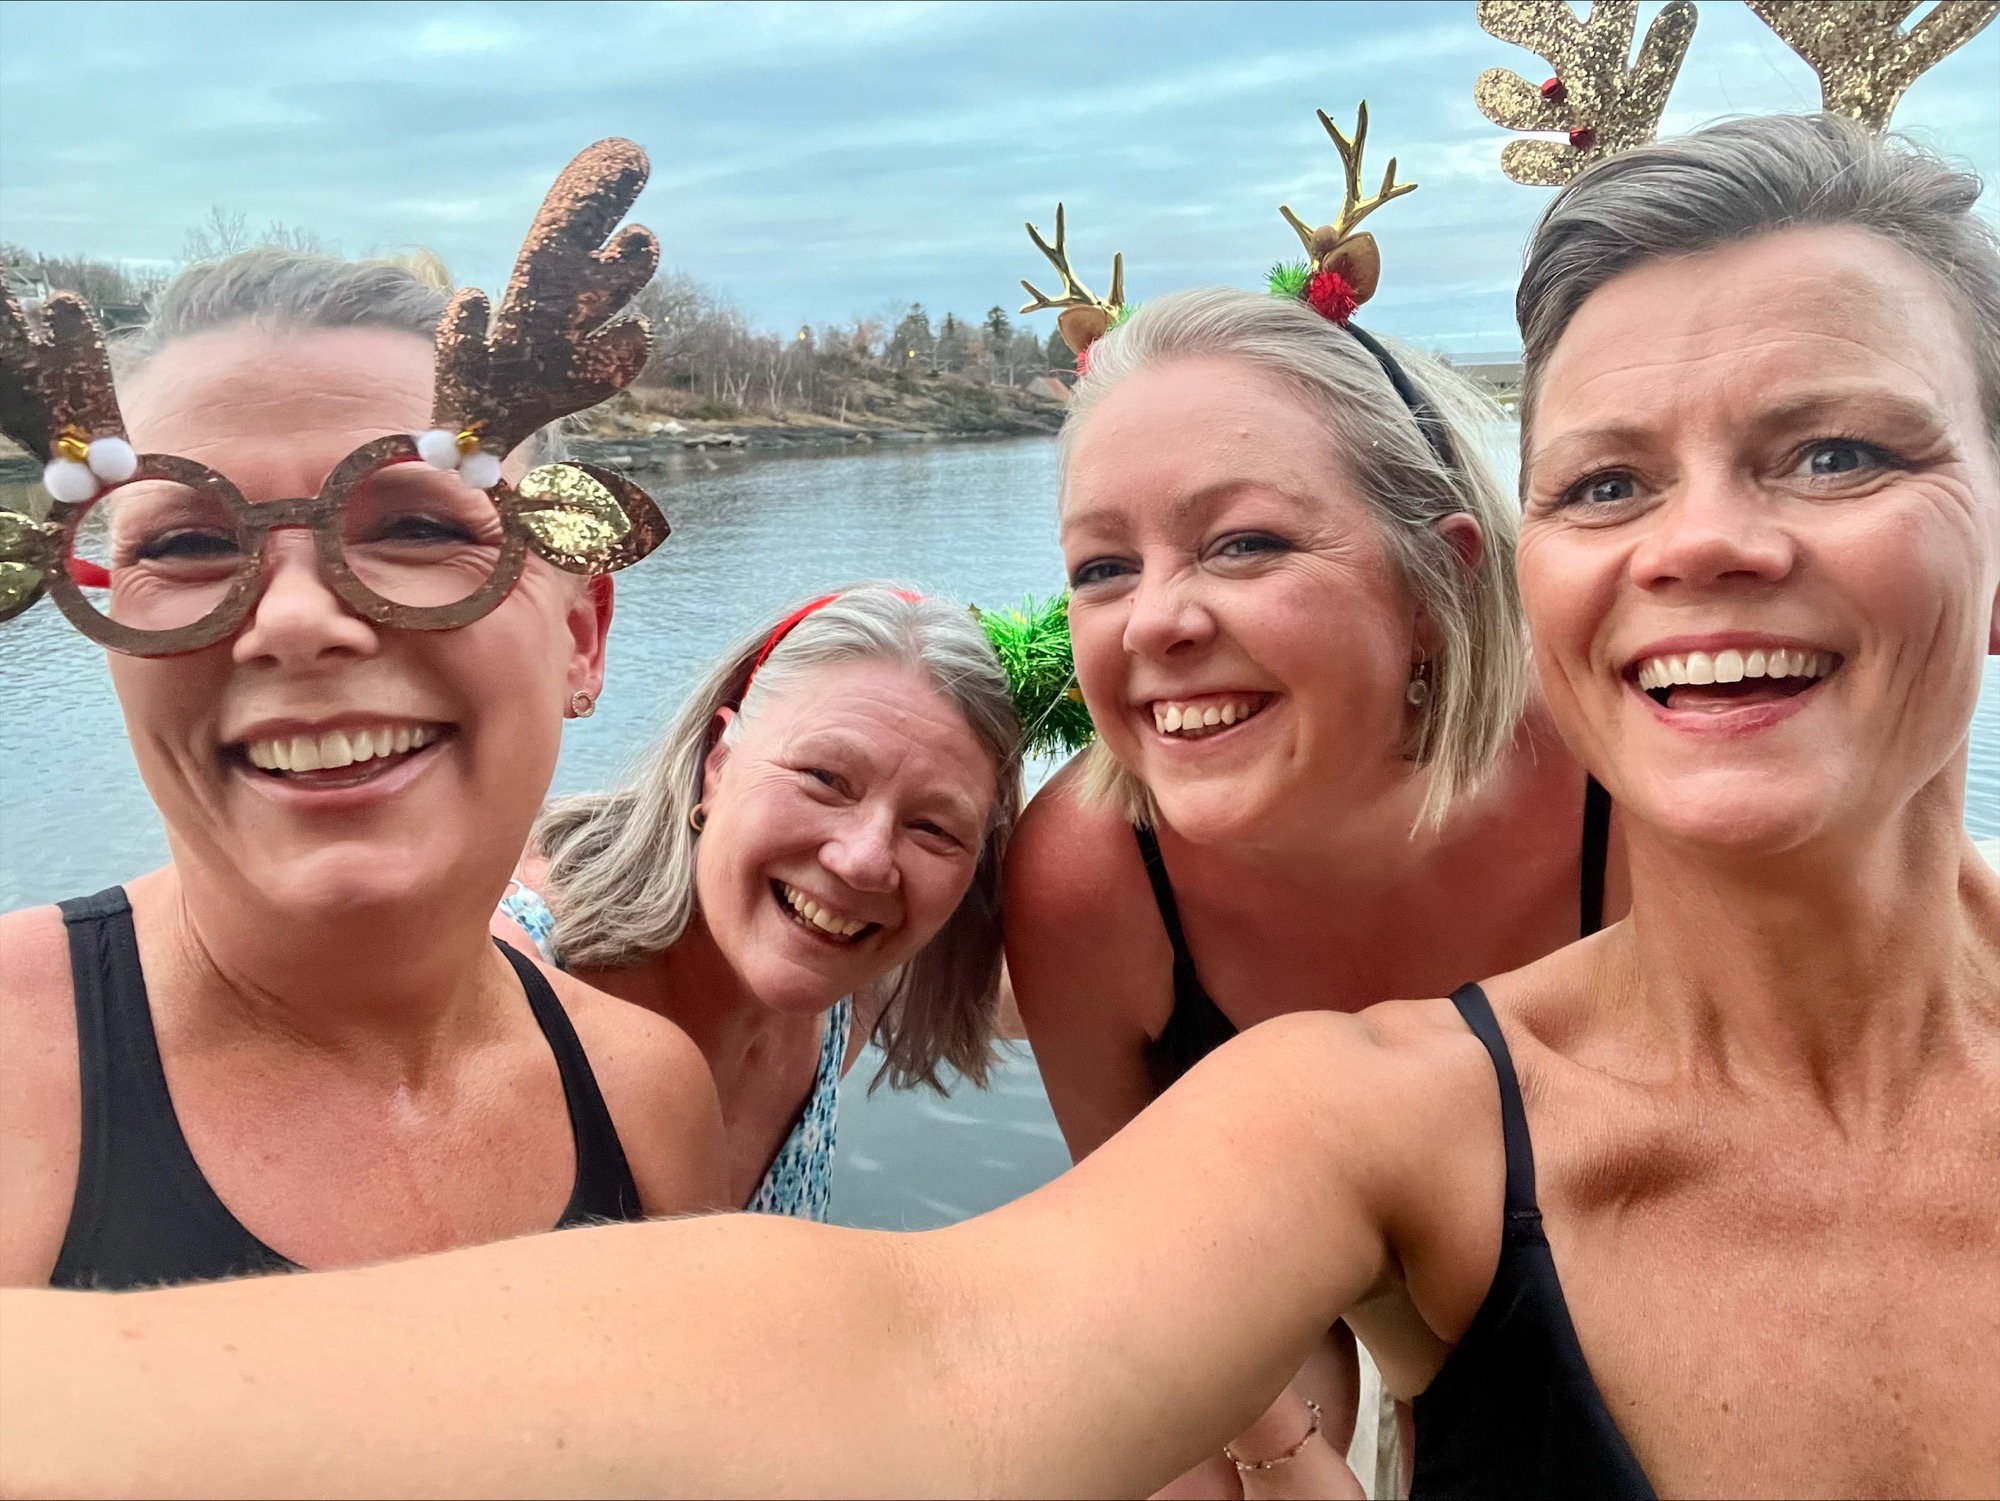 Fire kvinner med julete hårbøyler bader og smiler til kamera 